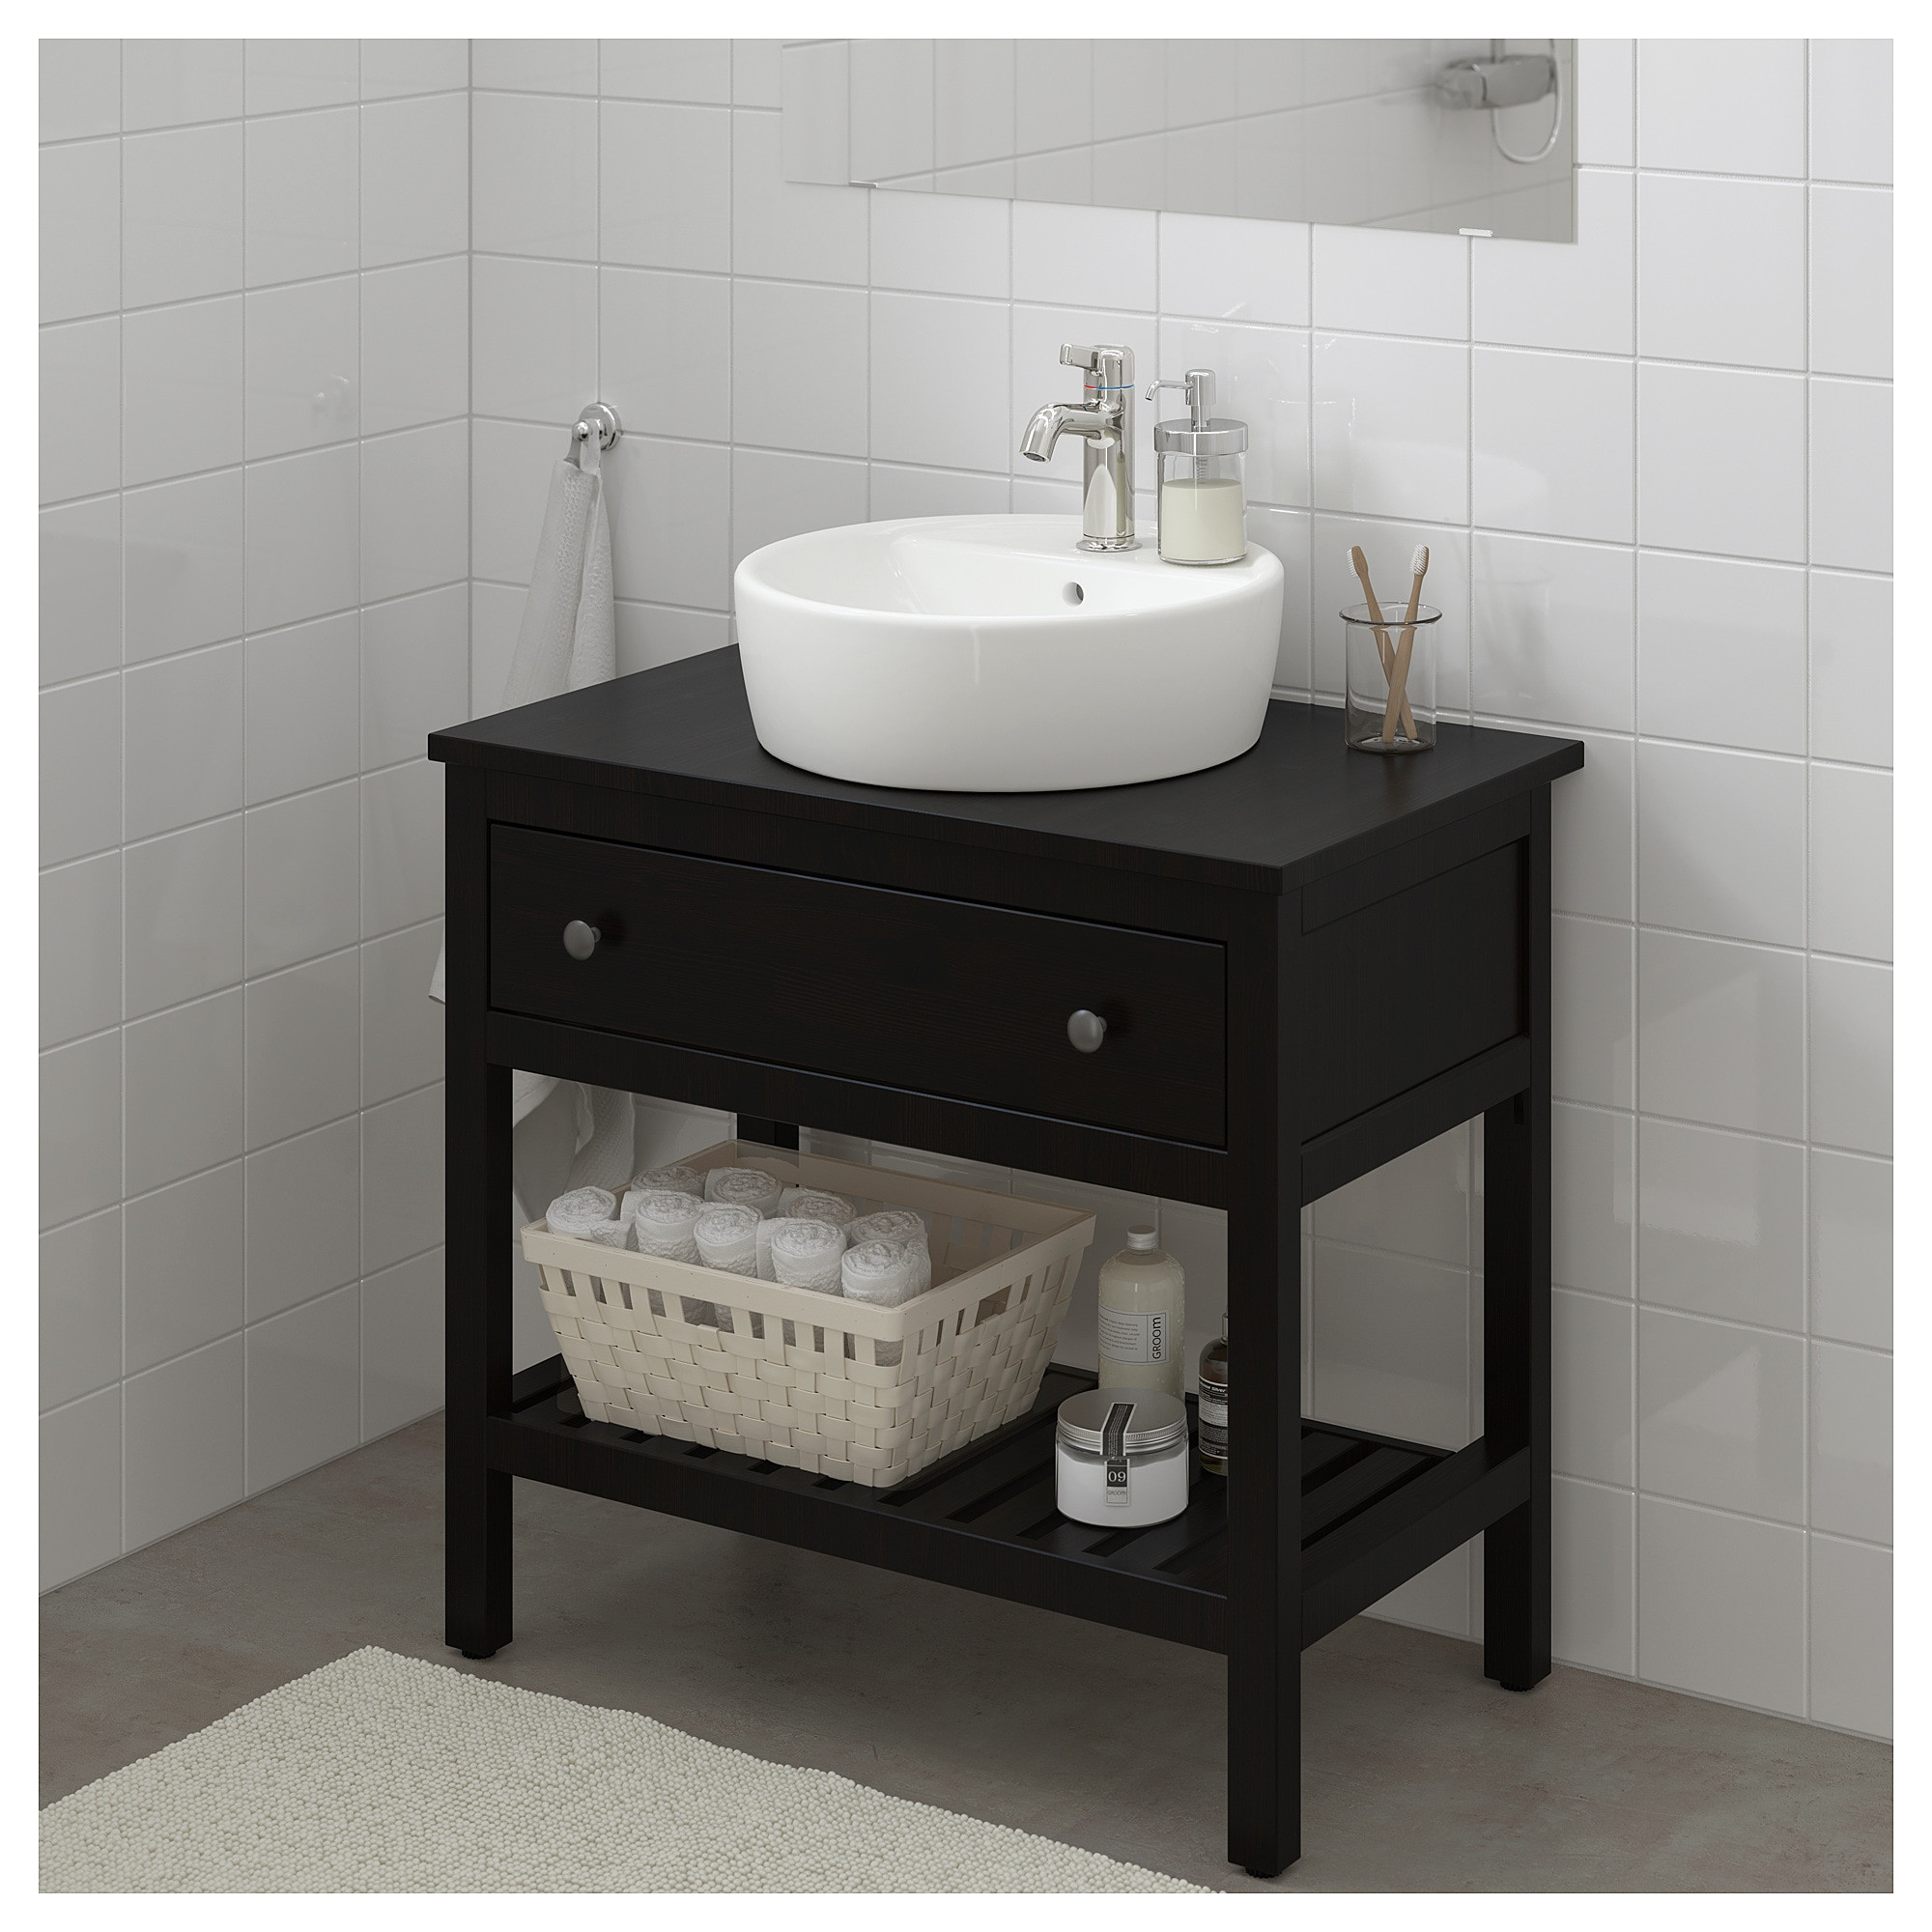 Hemnes Bathroom Vanity
 HEMNES Bathroom vanity 1 drawer black brown stain IKEA